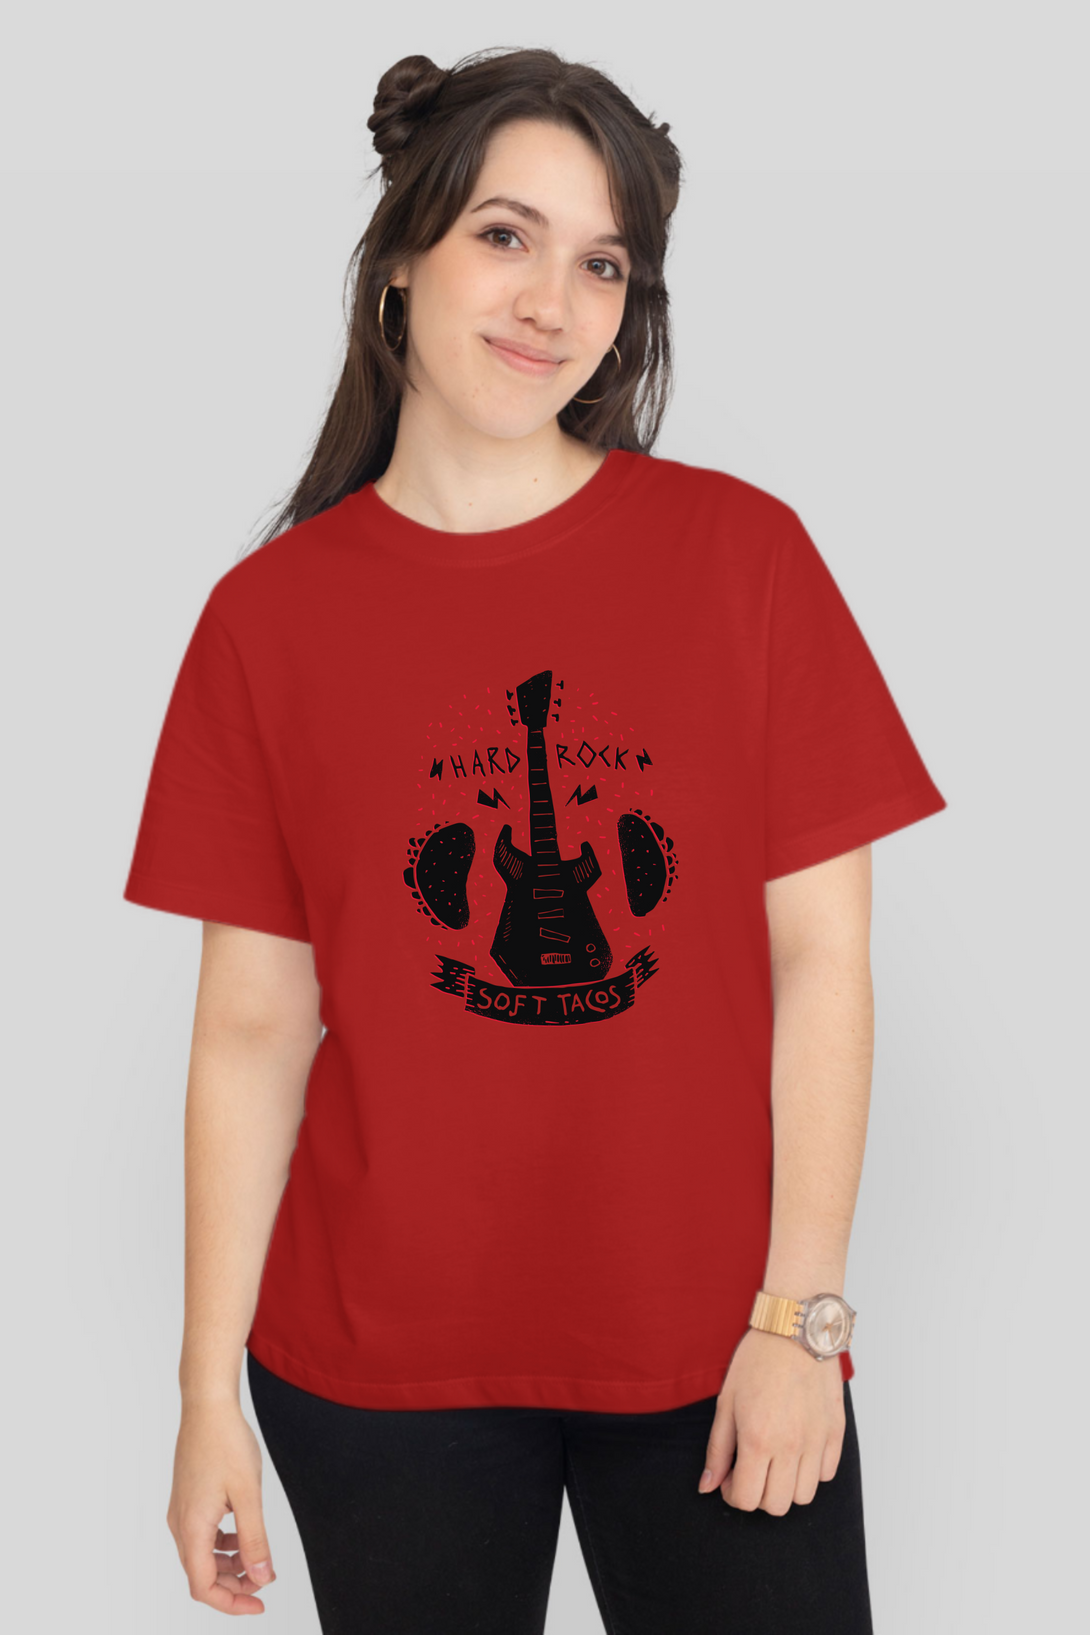 Hard Rock Printed T-Shirt For Women - WowWaves - 9